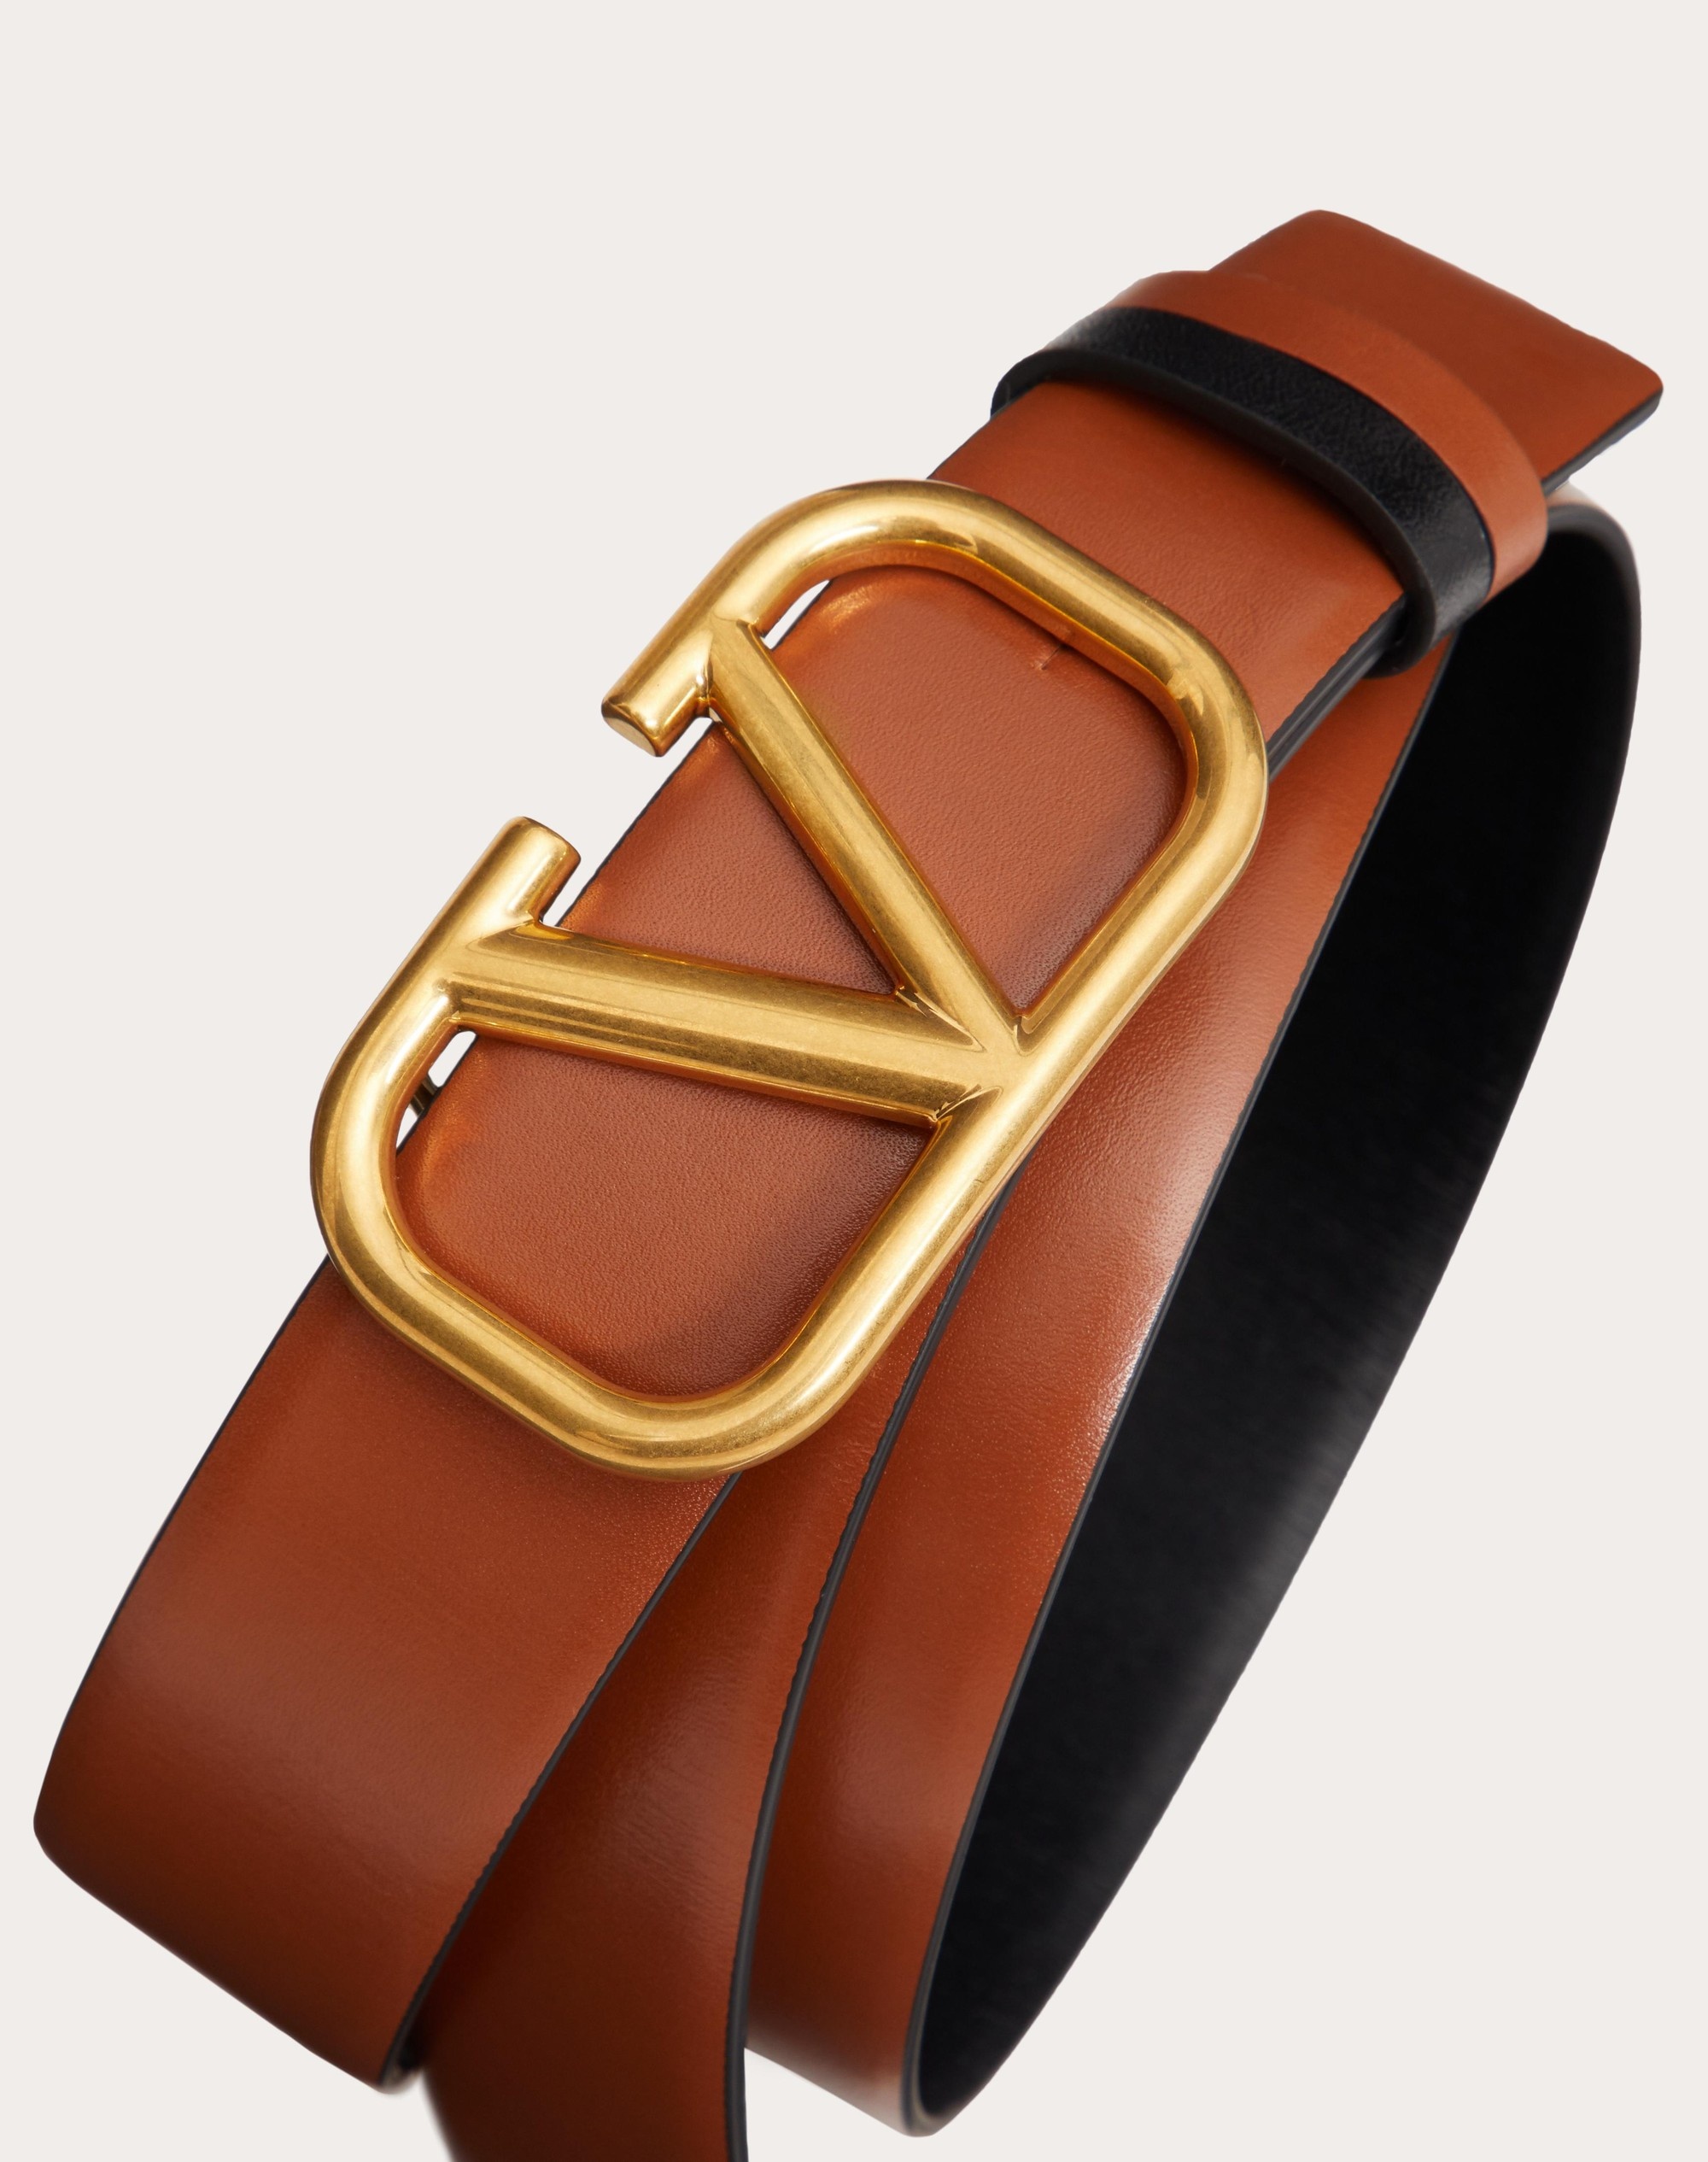 4cm vlogo reversible leather belt - Valentino Garavani - Women